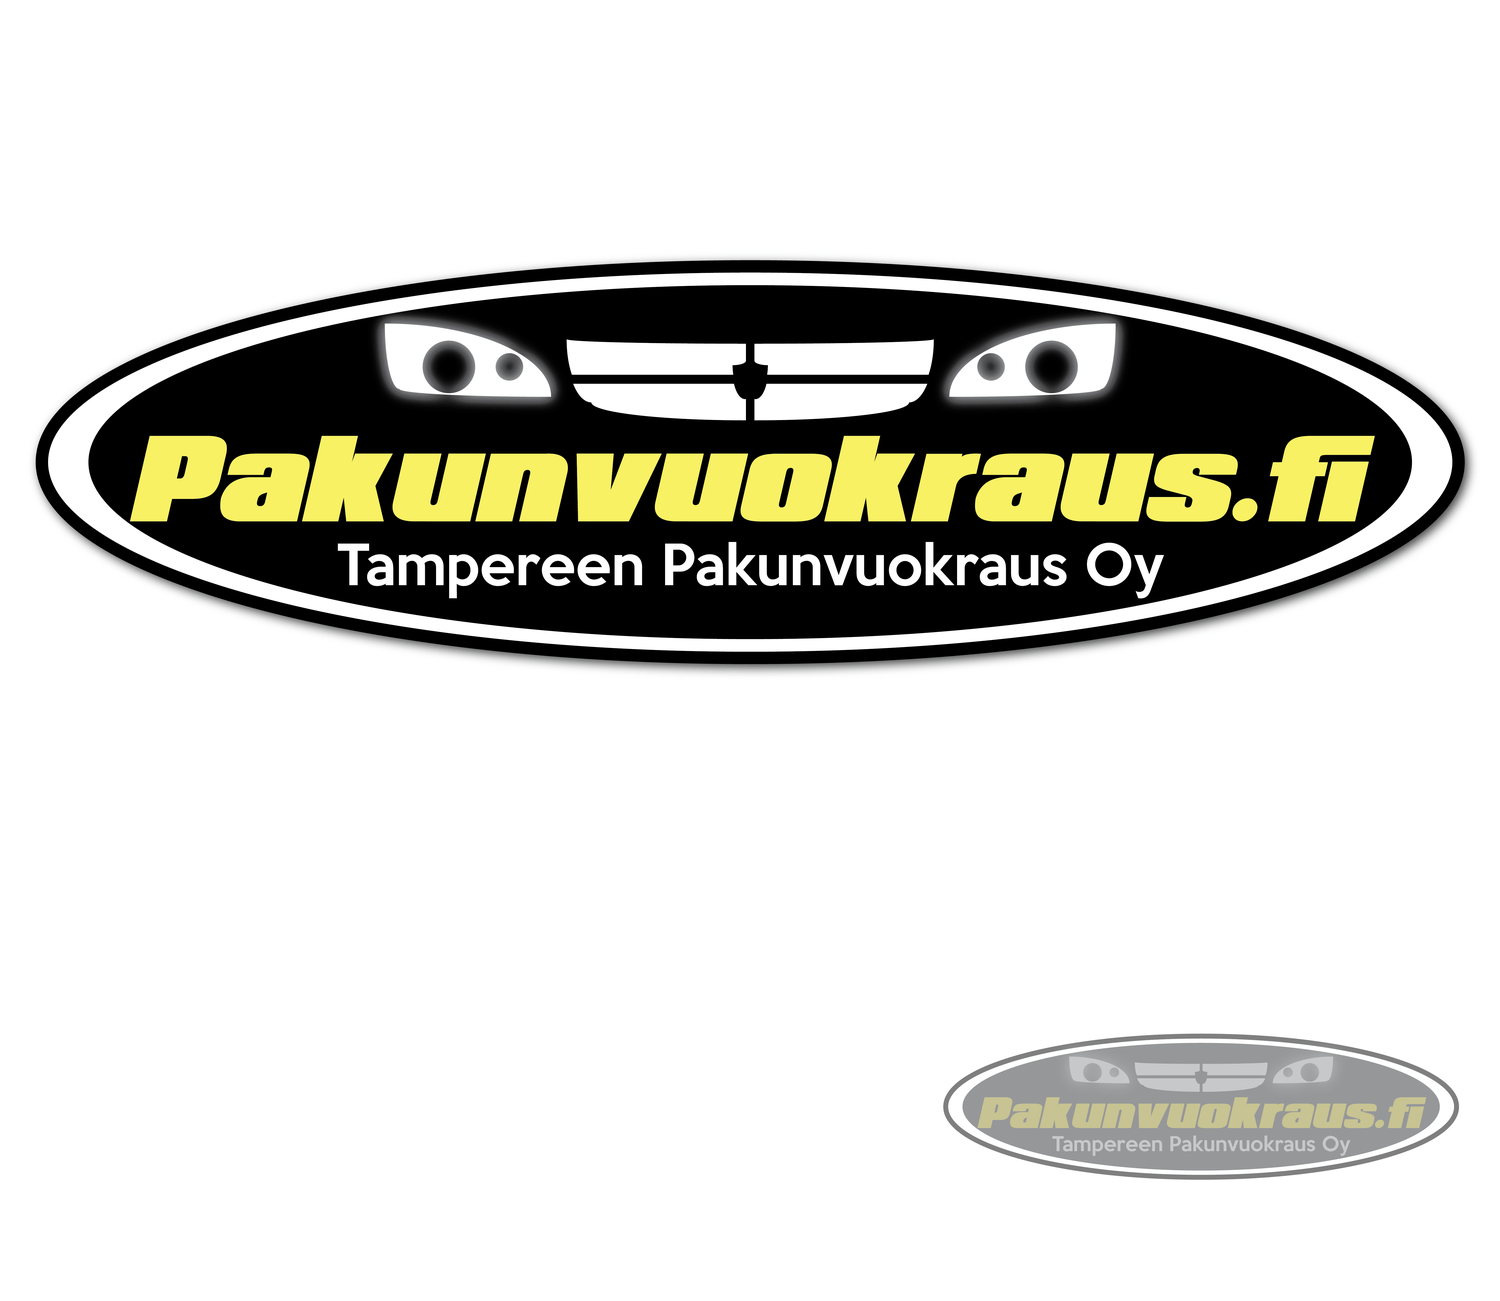 American Rental Car Company Logo - Colorful, Modern, Rental Car Logo Design for pakunvuokraus.fi